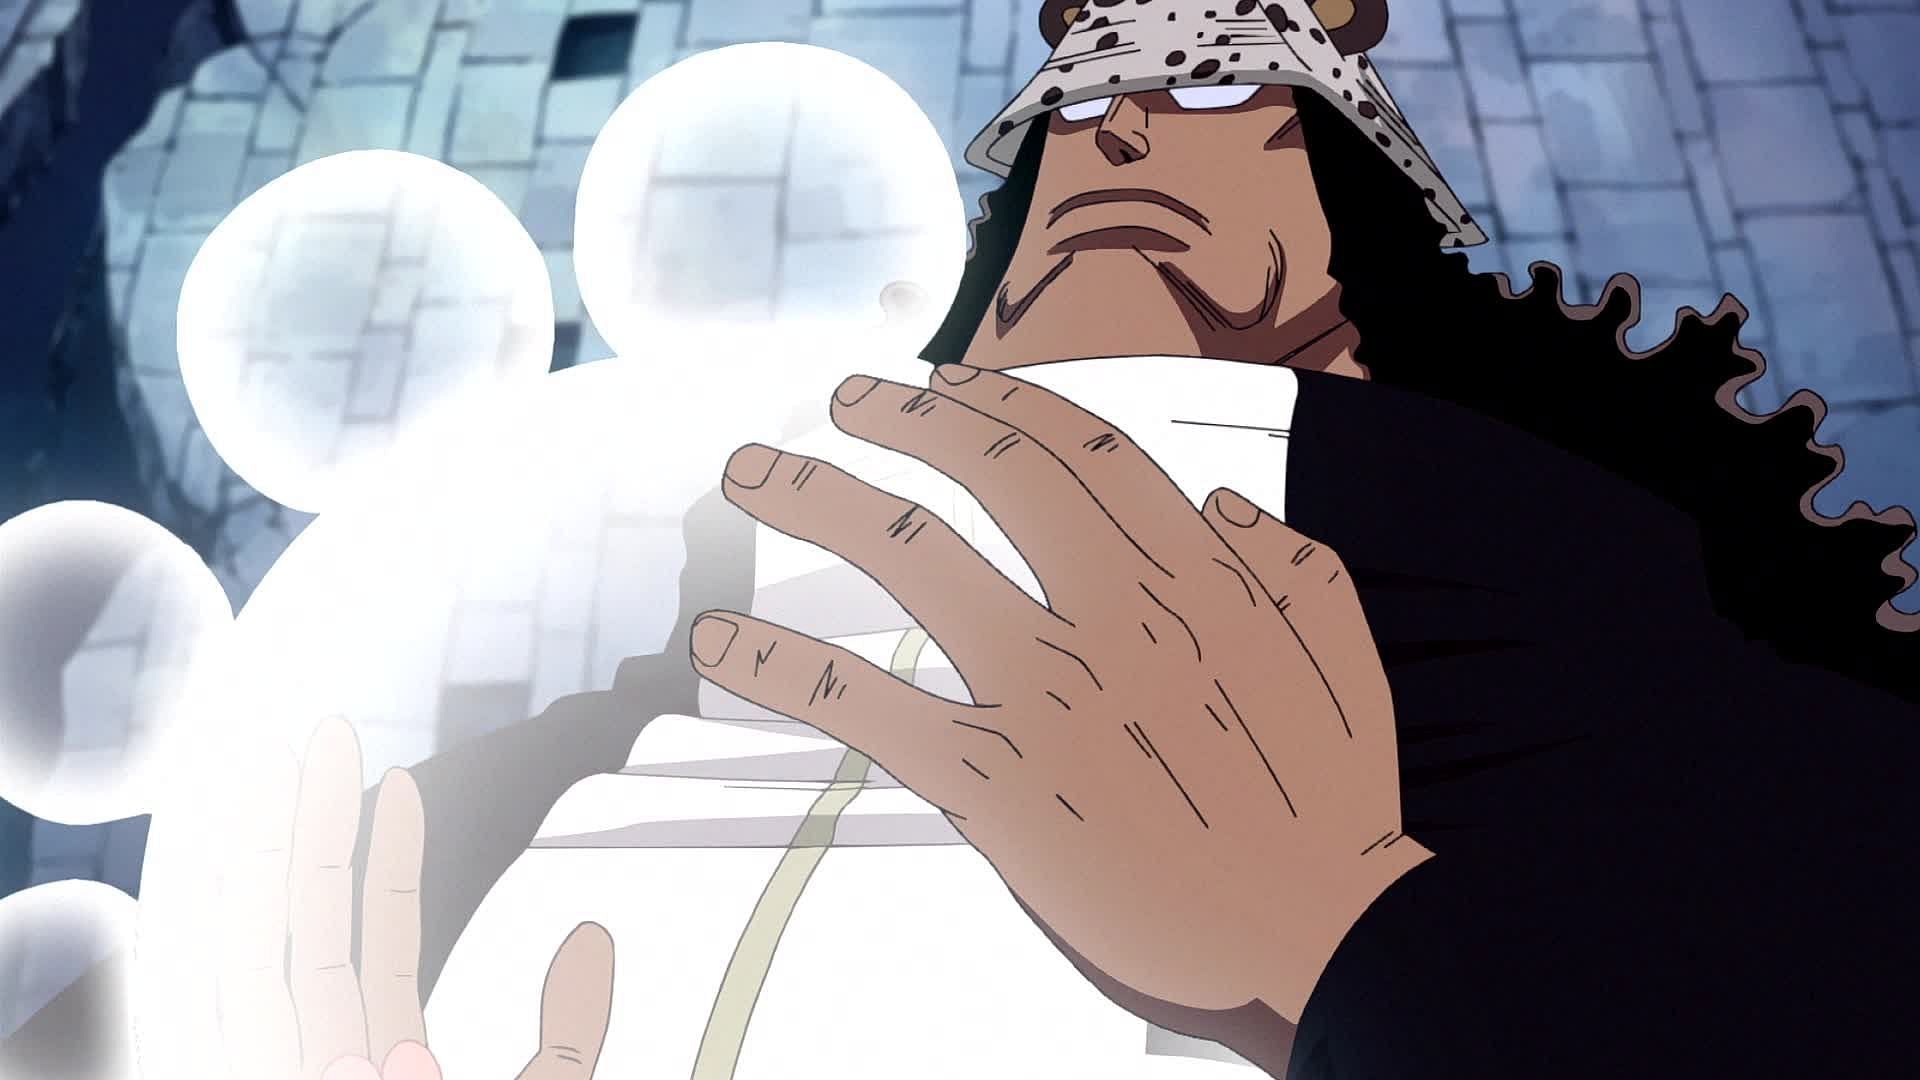 One Piece chapter 1100: Final act of Kuma